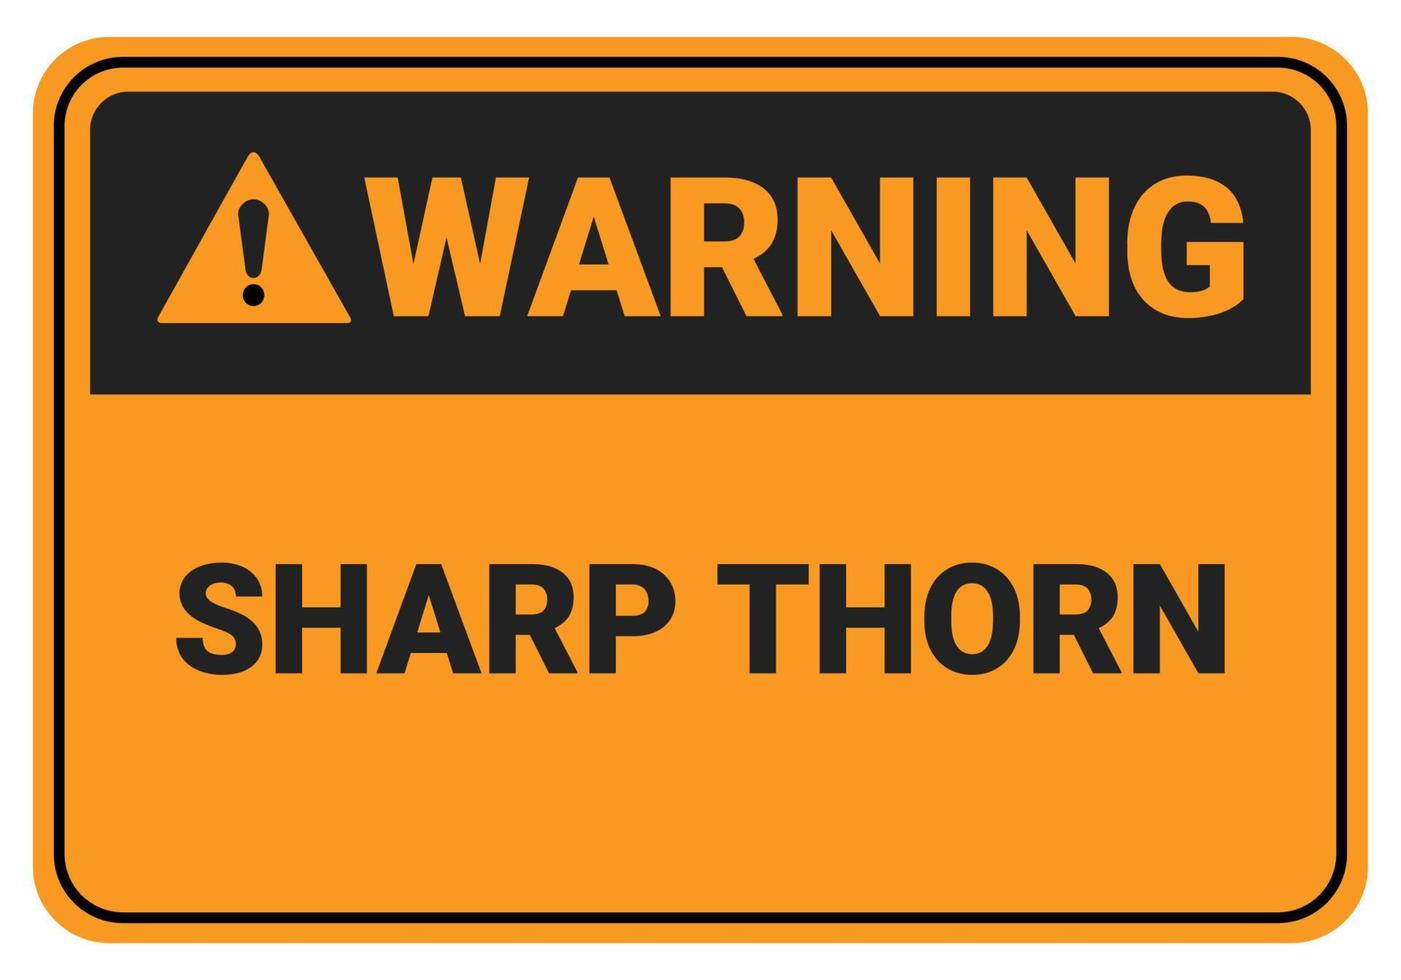 Warning sharp thorn. Safety sign. symbol illustration. Osha and ANSI standard. vector